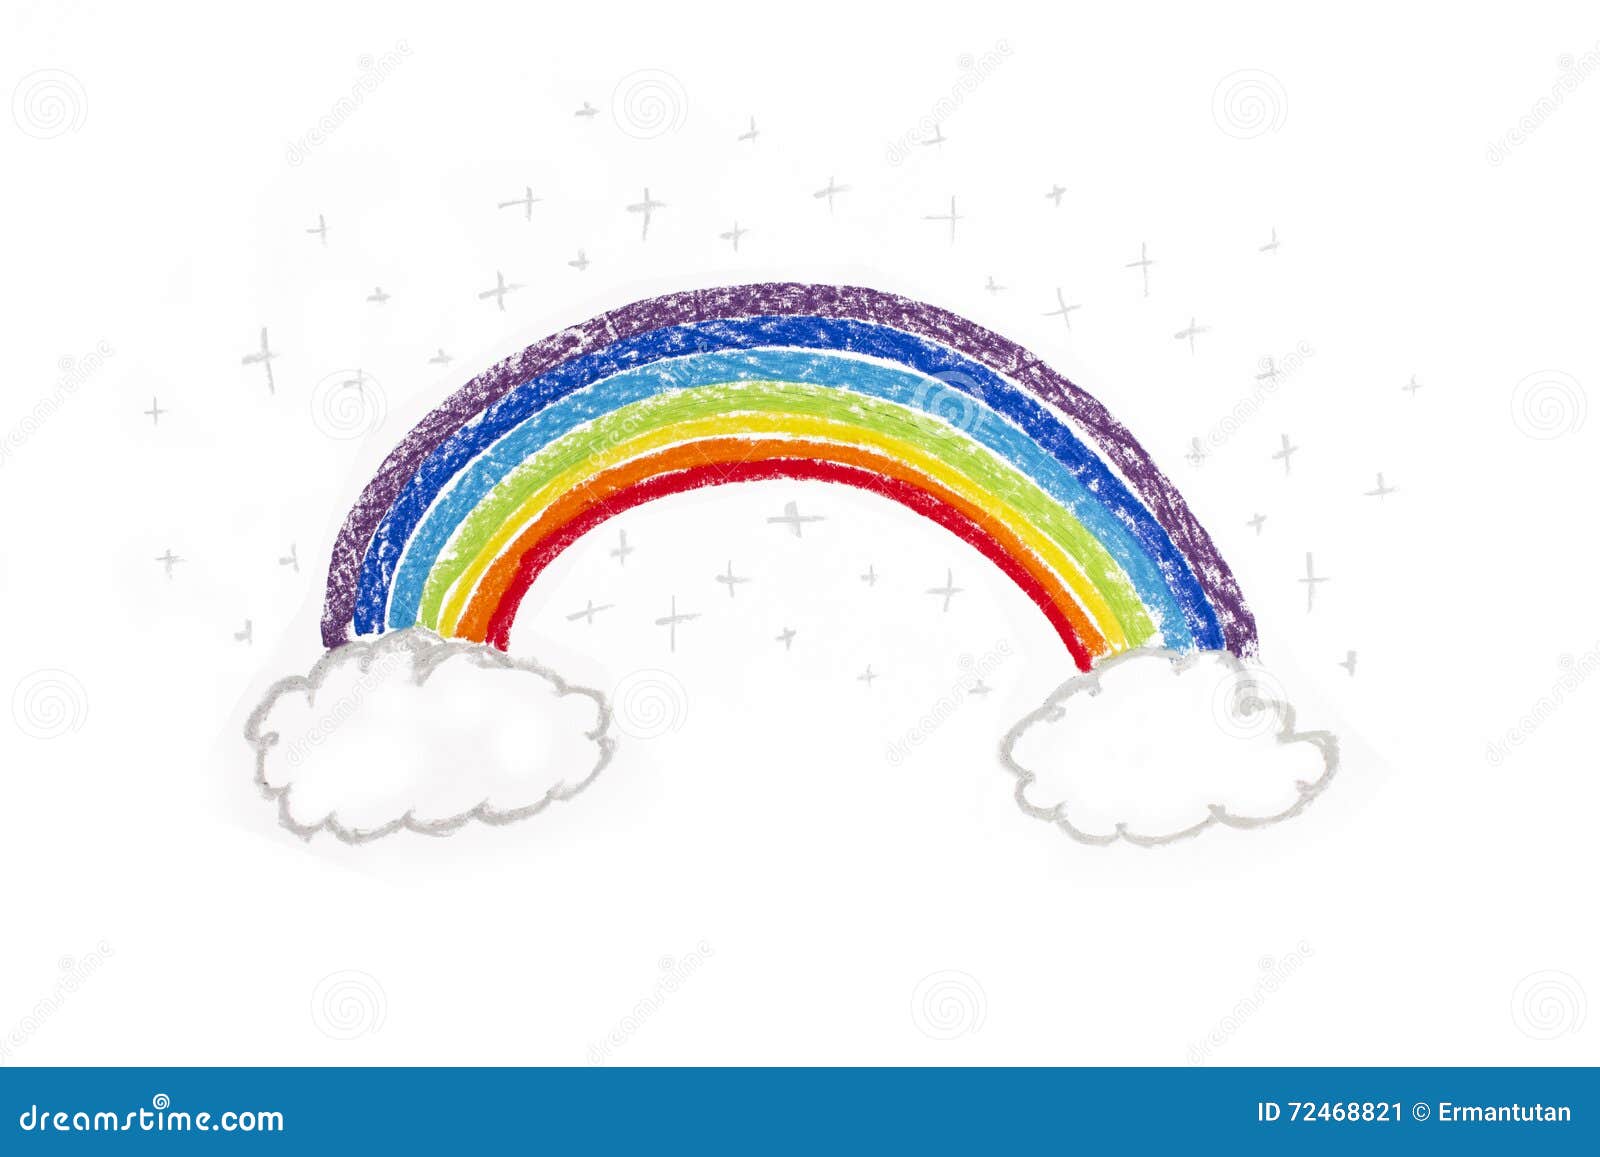 Child drawing rainbow stock illustration. Illustration of ...